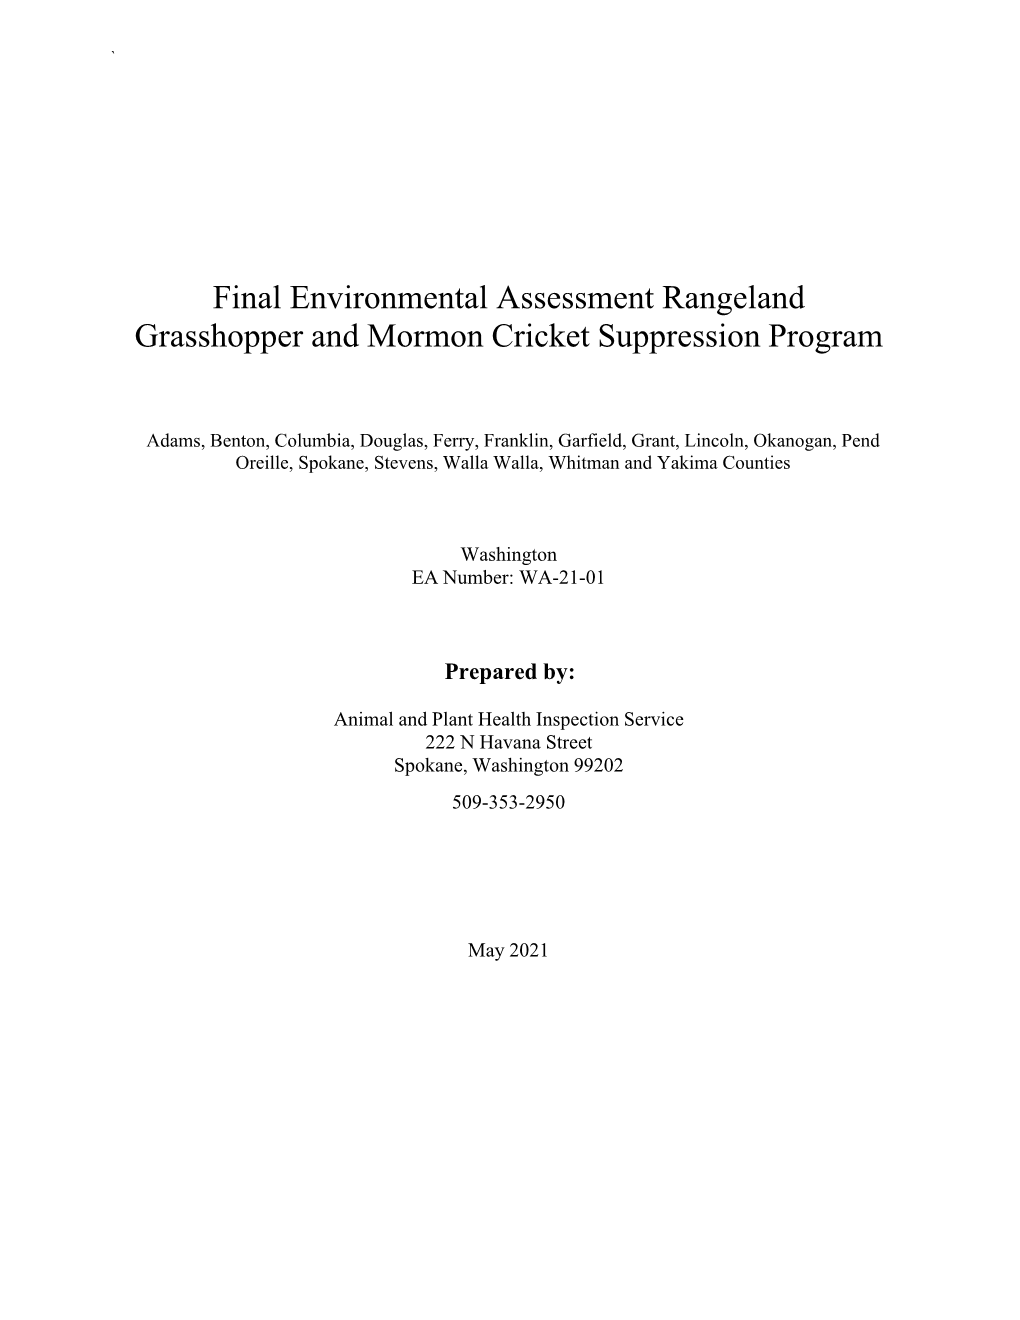 Site-Specific Environmental Assessment Rangeland Grasshopper And